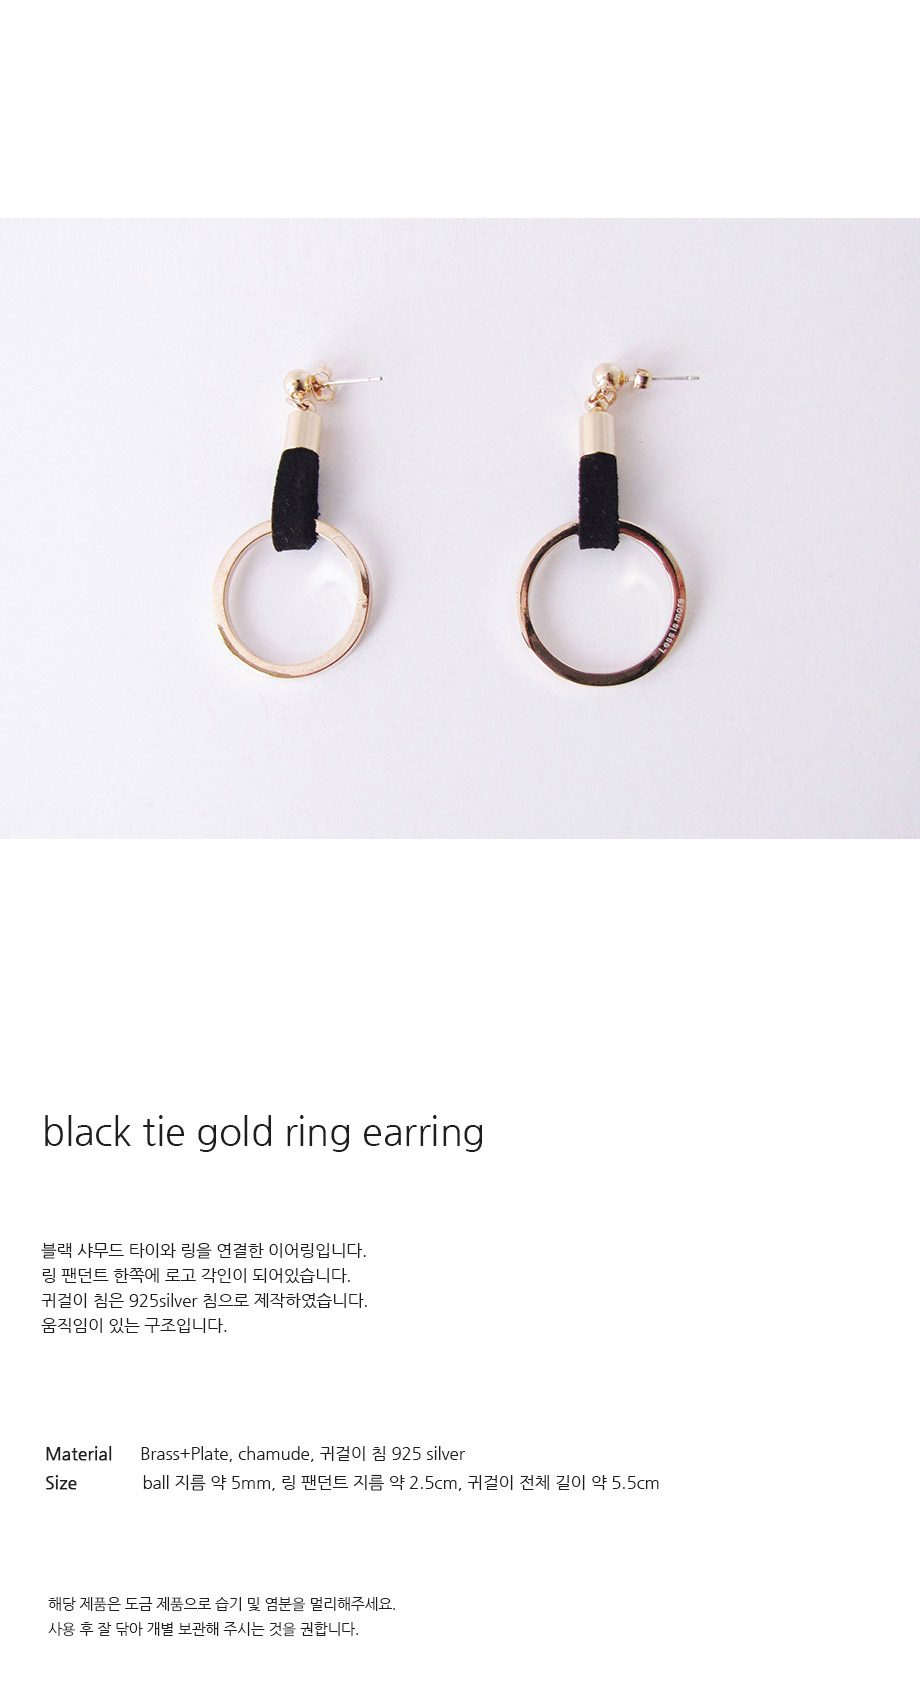 black tie gold ring earring 30,000원 - 레스이즈모어 이동요망, X주얼리/시계, 귀걸이, 골드 바보사랑 black tie gold ring earring 30,000원 - 레스이즈모어 이동요망, X주얼리/시계, 귀걸이, 골드 바보사랑